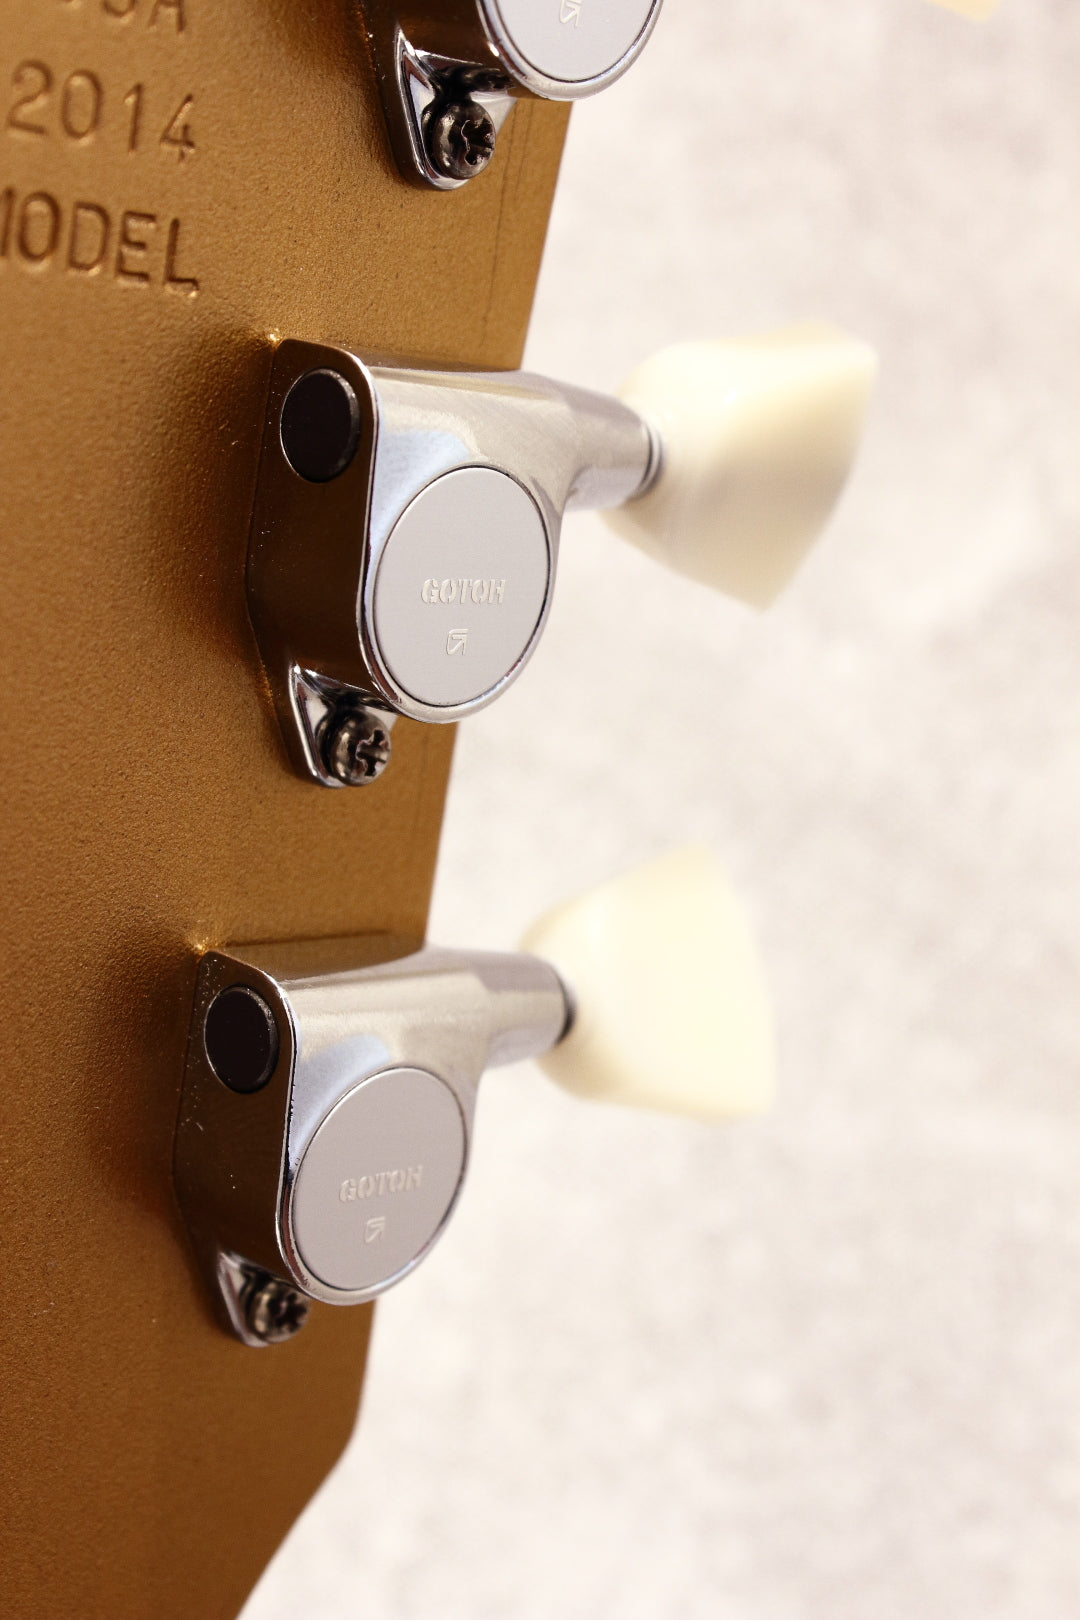 Gibson SG Futura Bullion Gold 2014